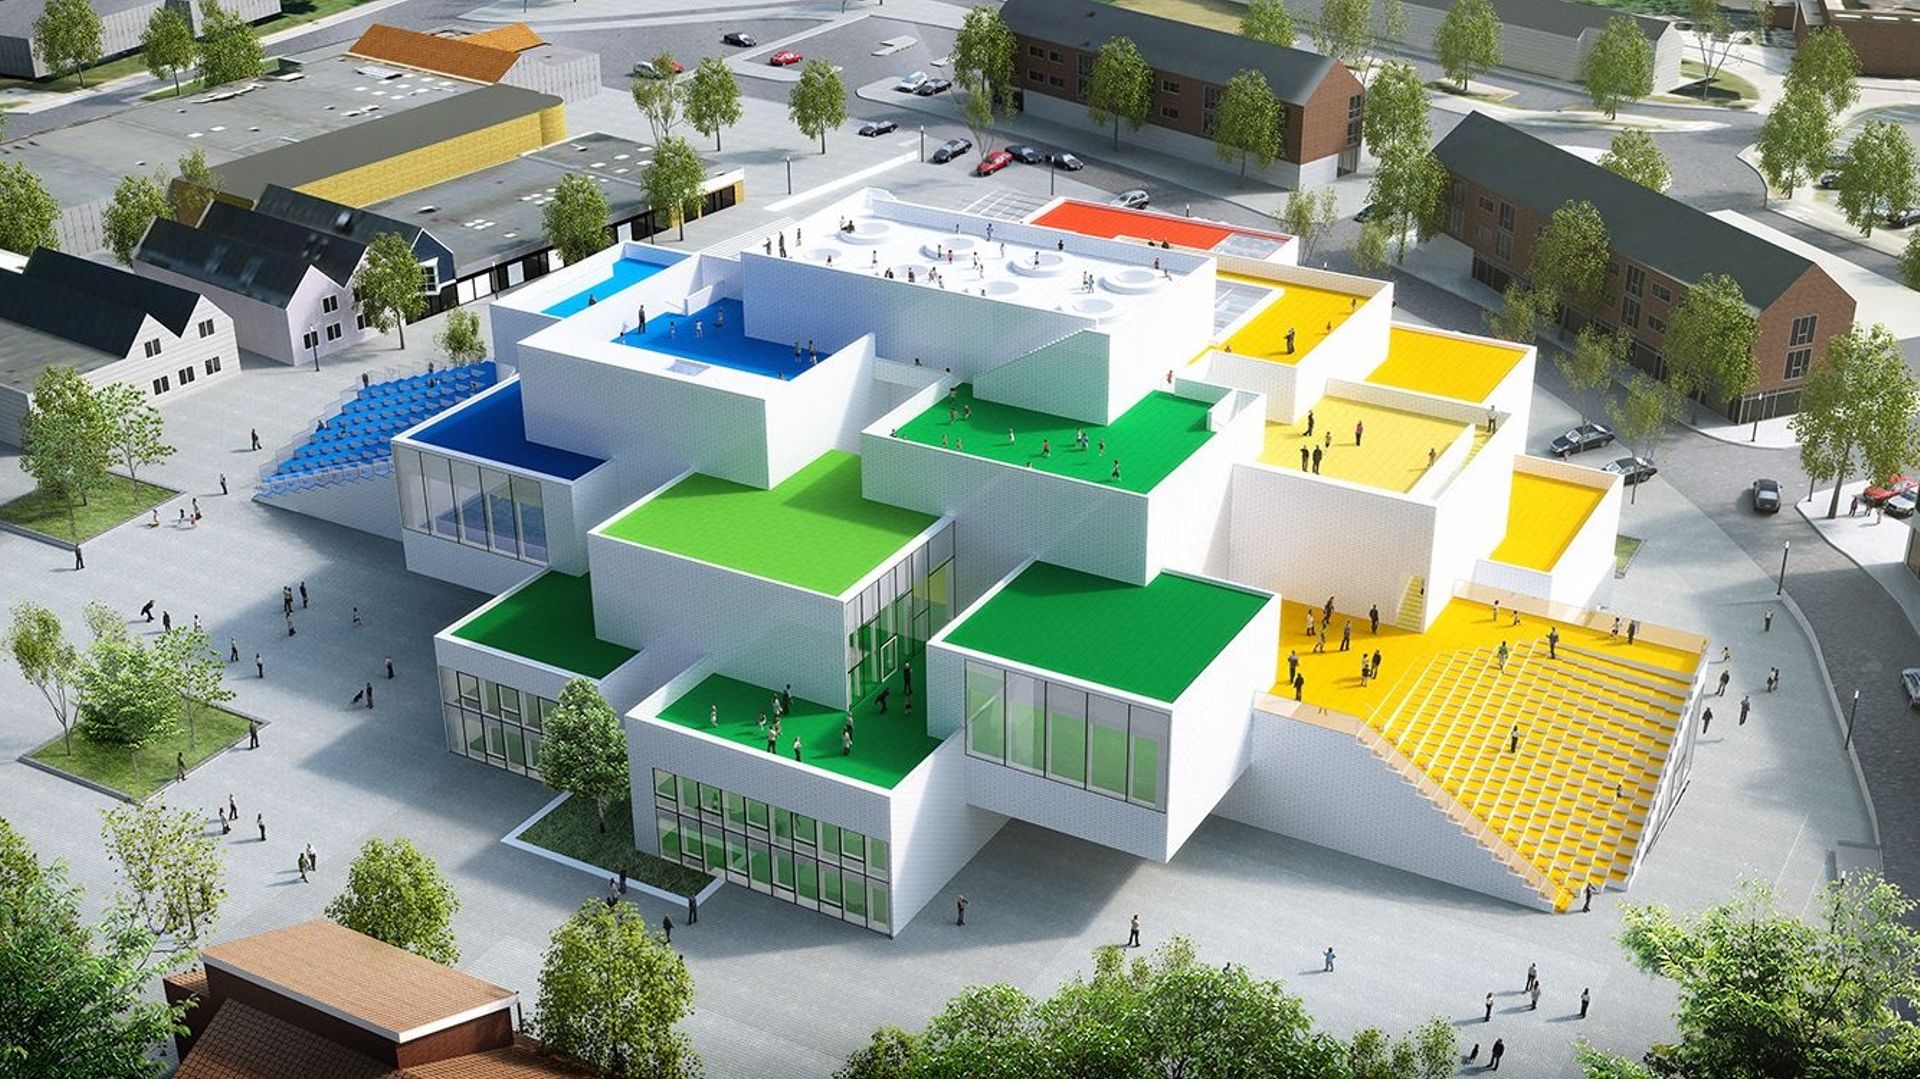 La Lego House, à Billund (Danemark), conçue par le cabinet Bjarke Ingels Group (BIG)